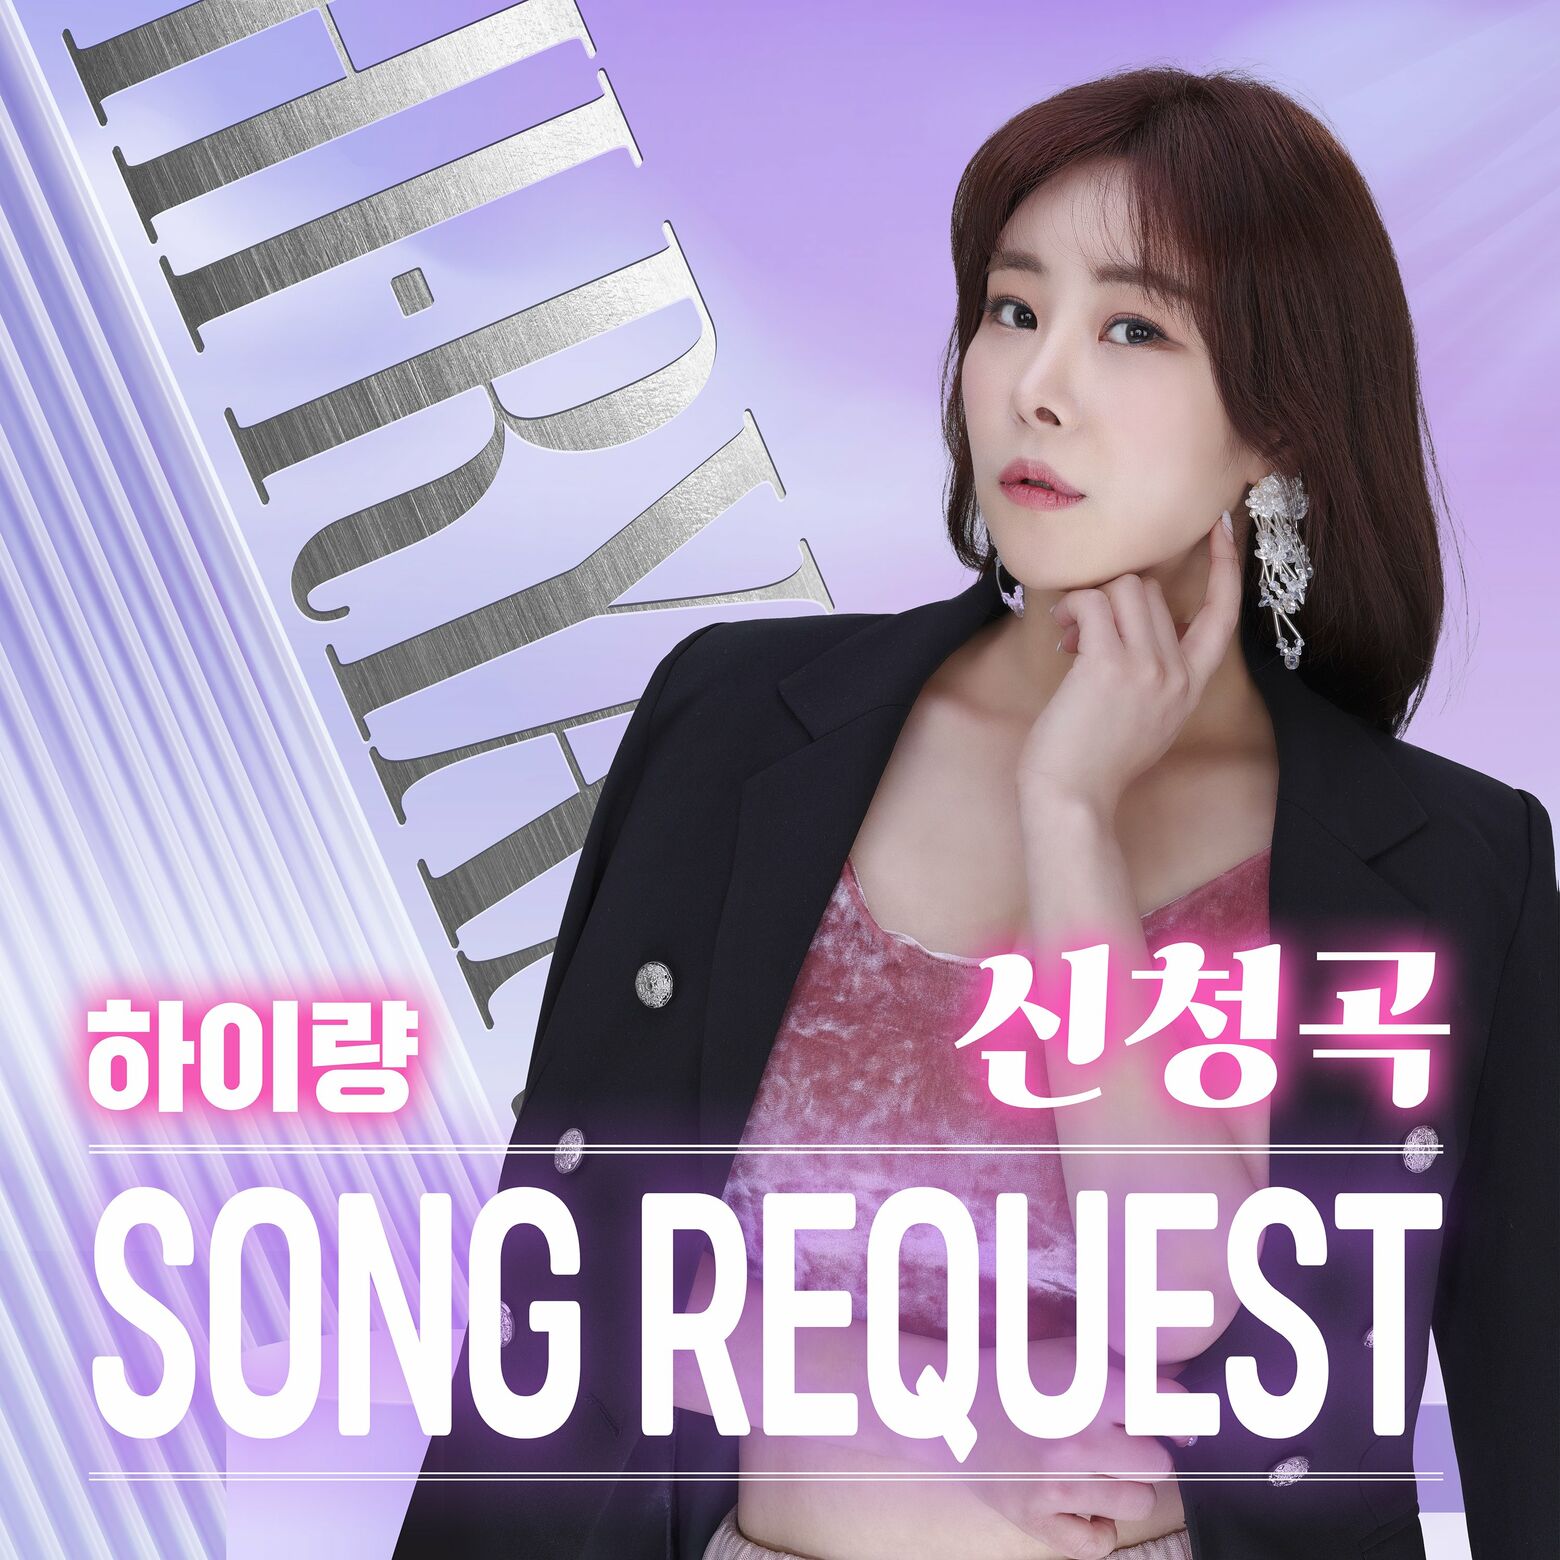 HI Ryang – Song Request – Single